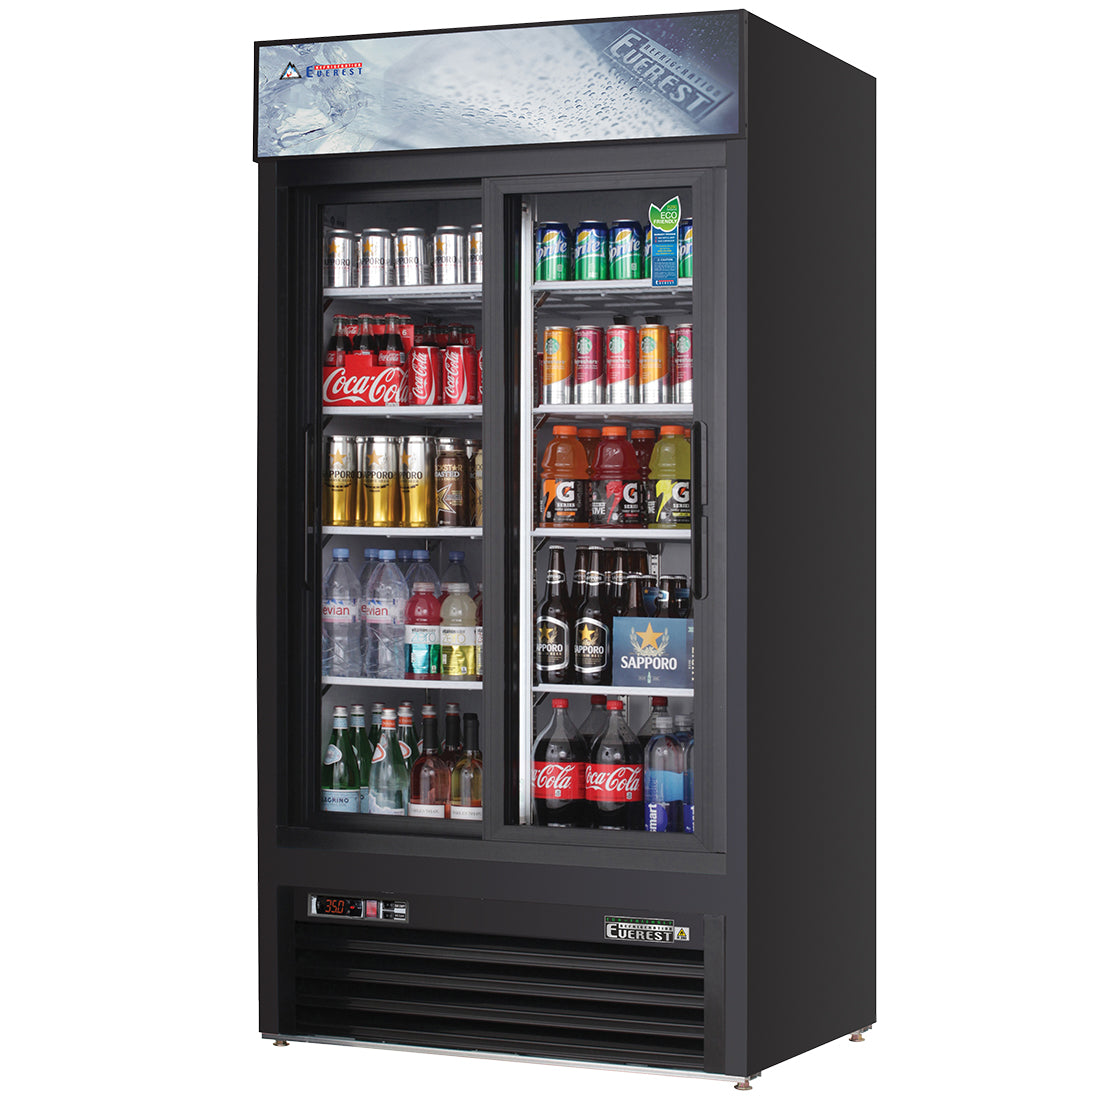 Everest 2 Door Refrigerator Merchandiser (Sliding), 33 cu ft - Black Exterior Model EMGR33B